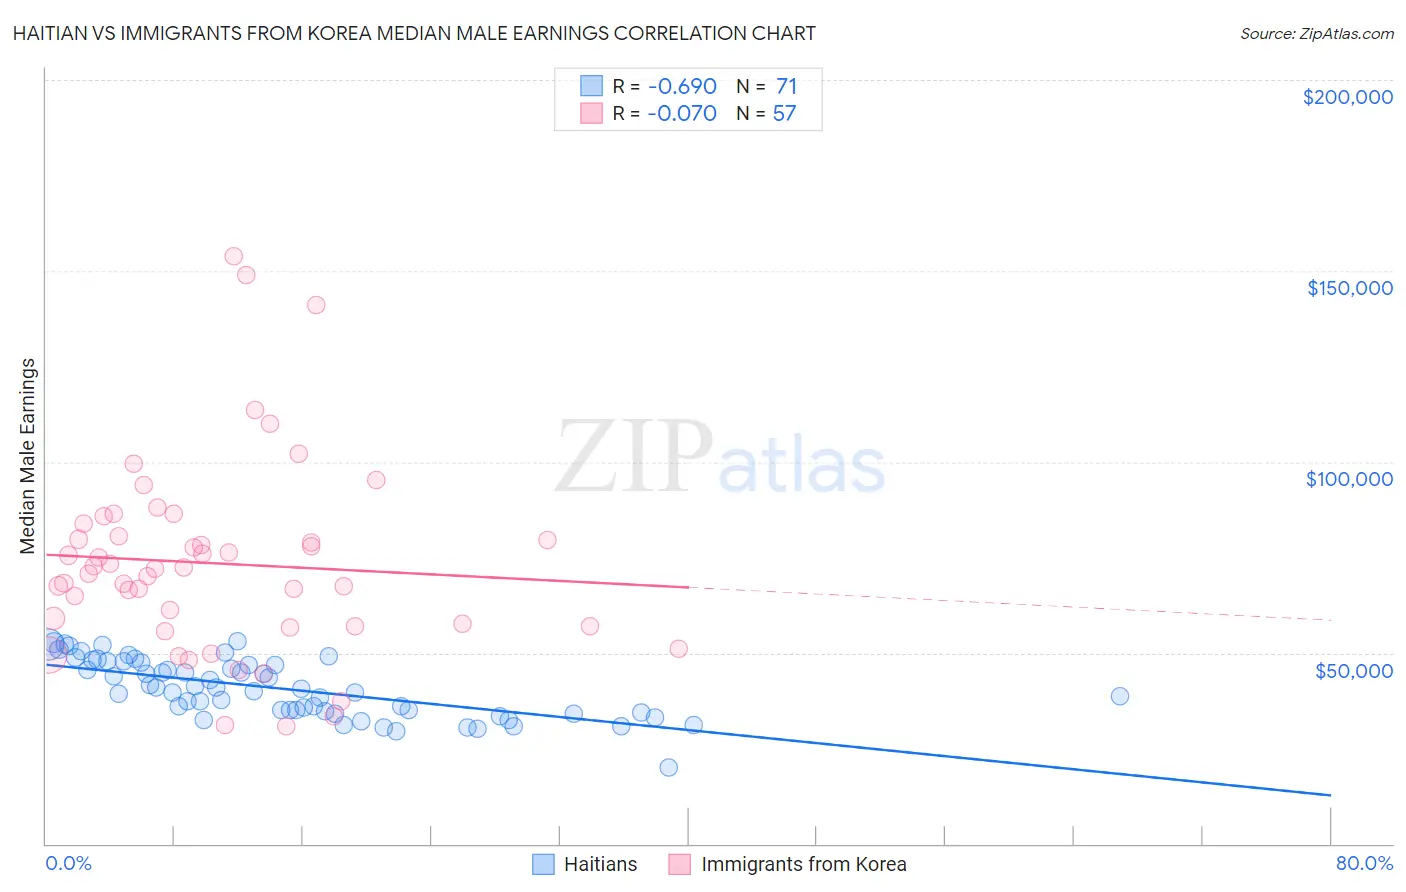 Haitian vs Immigrants from Korea Median Male Earnings